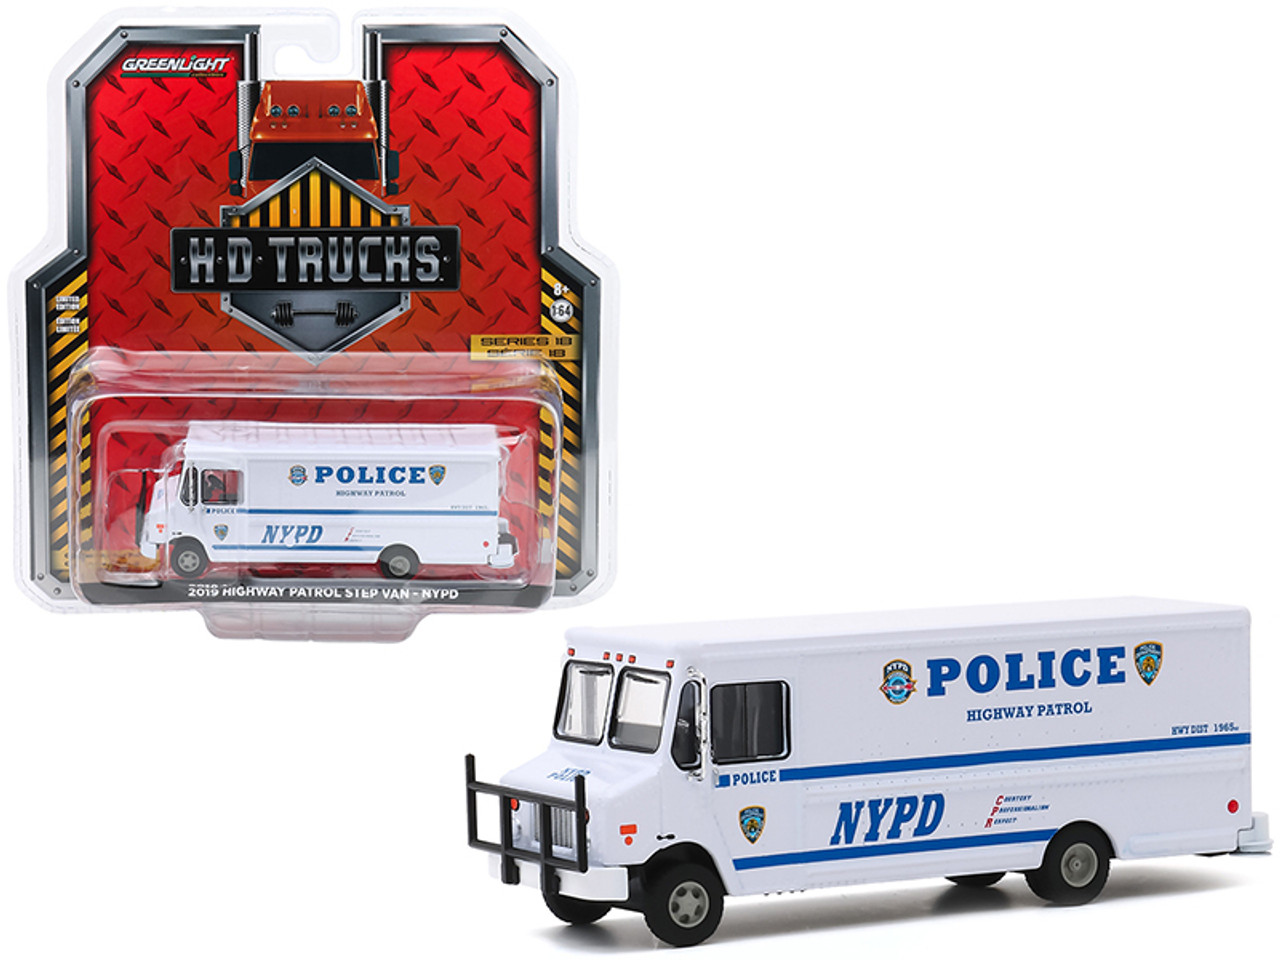 2019 Highway Patrol Step Van "New York City Police Dept" (NYPD) White "H.D. Trucks" Series 18 1/64 Diecast Model by Greenlight